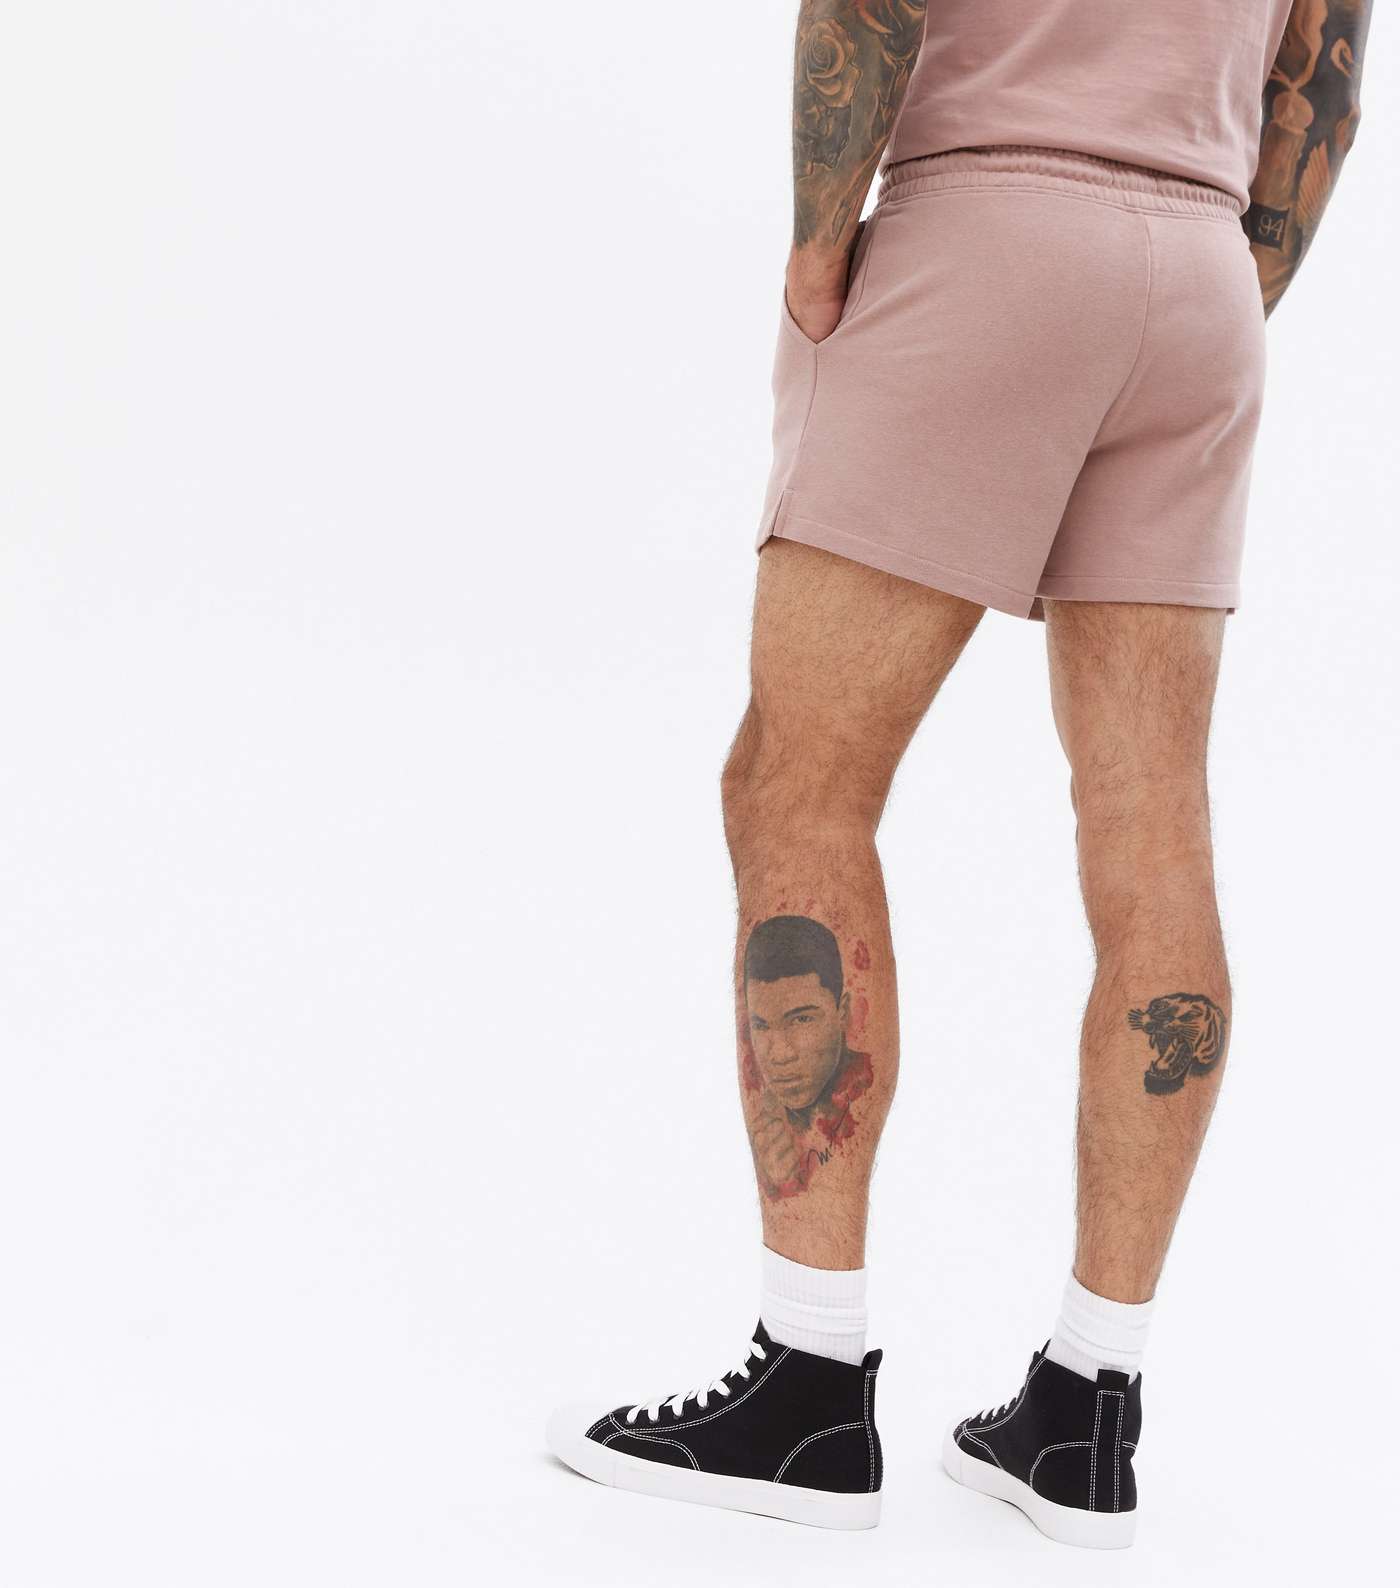 Pale Pink Jersey Short Length Shorts Image 3